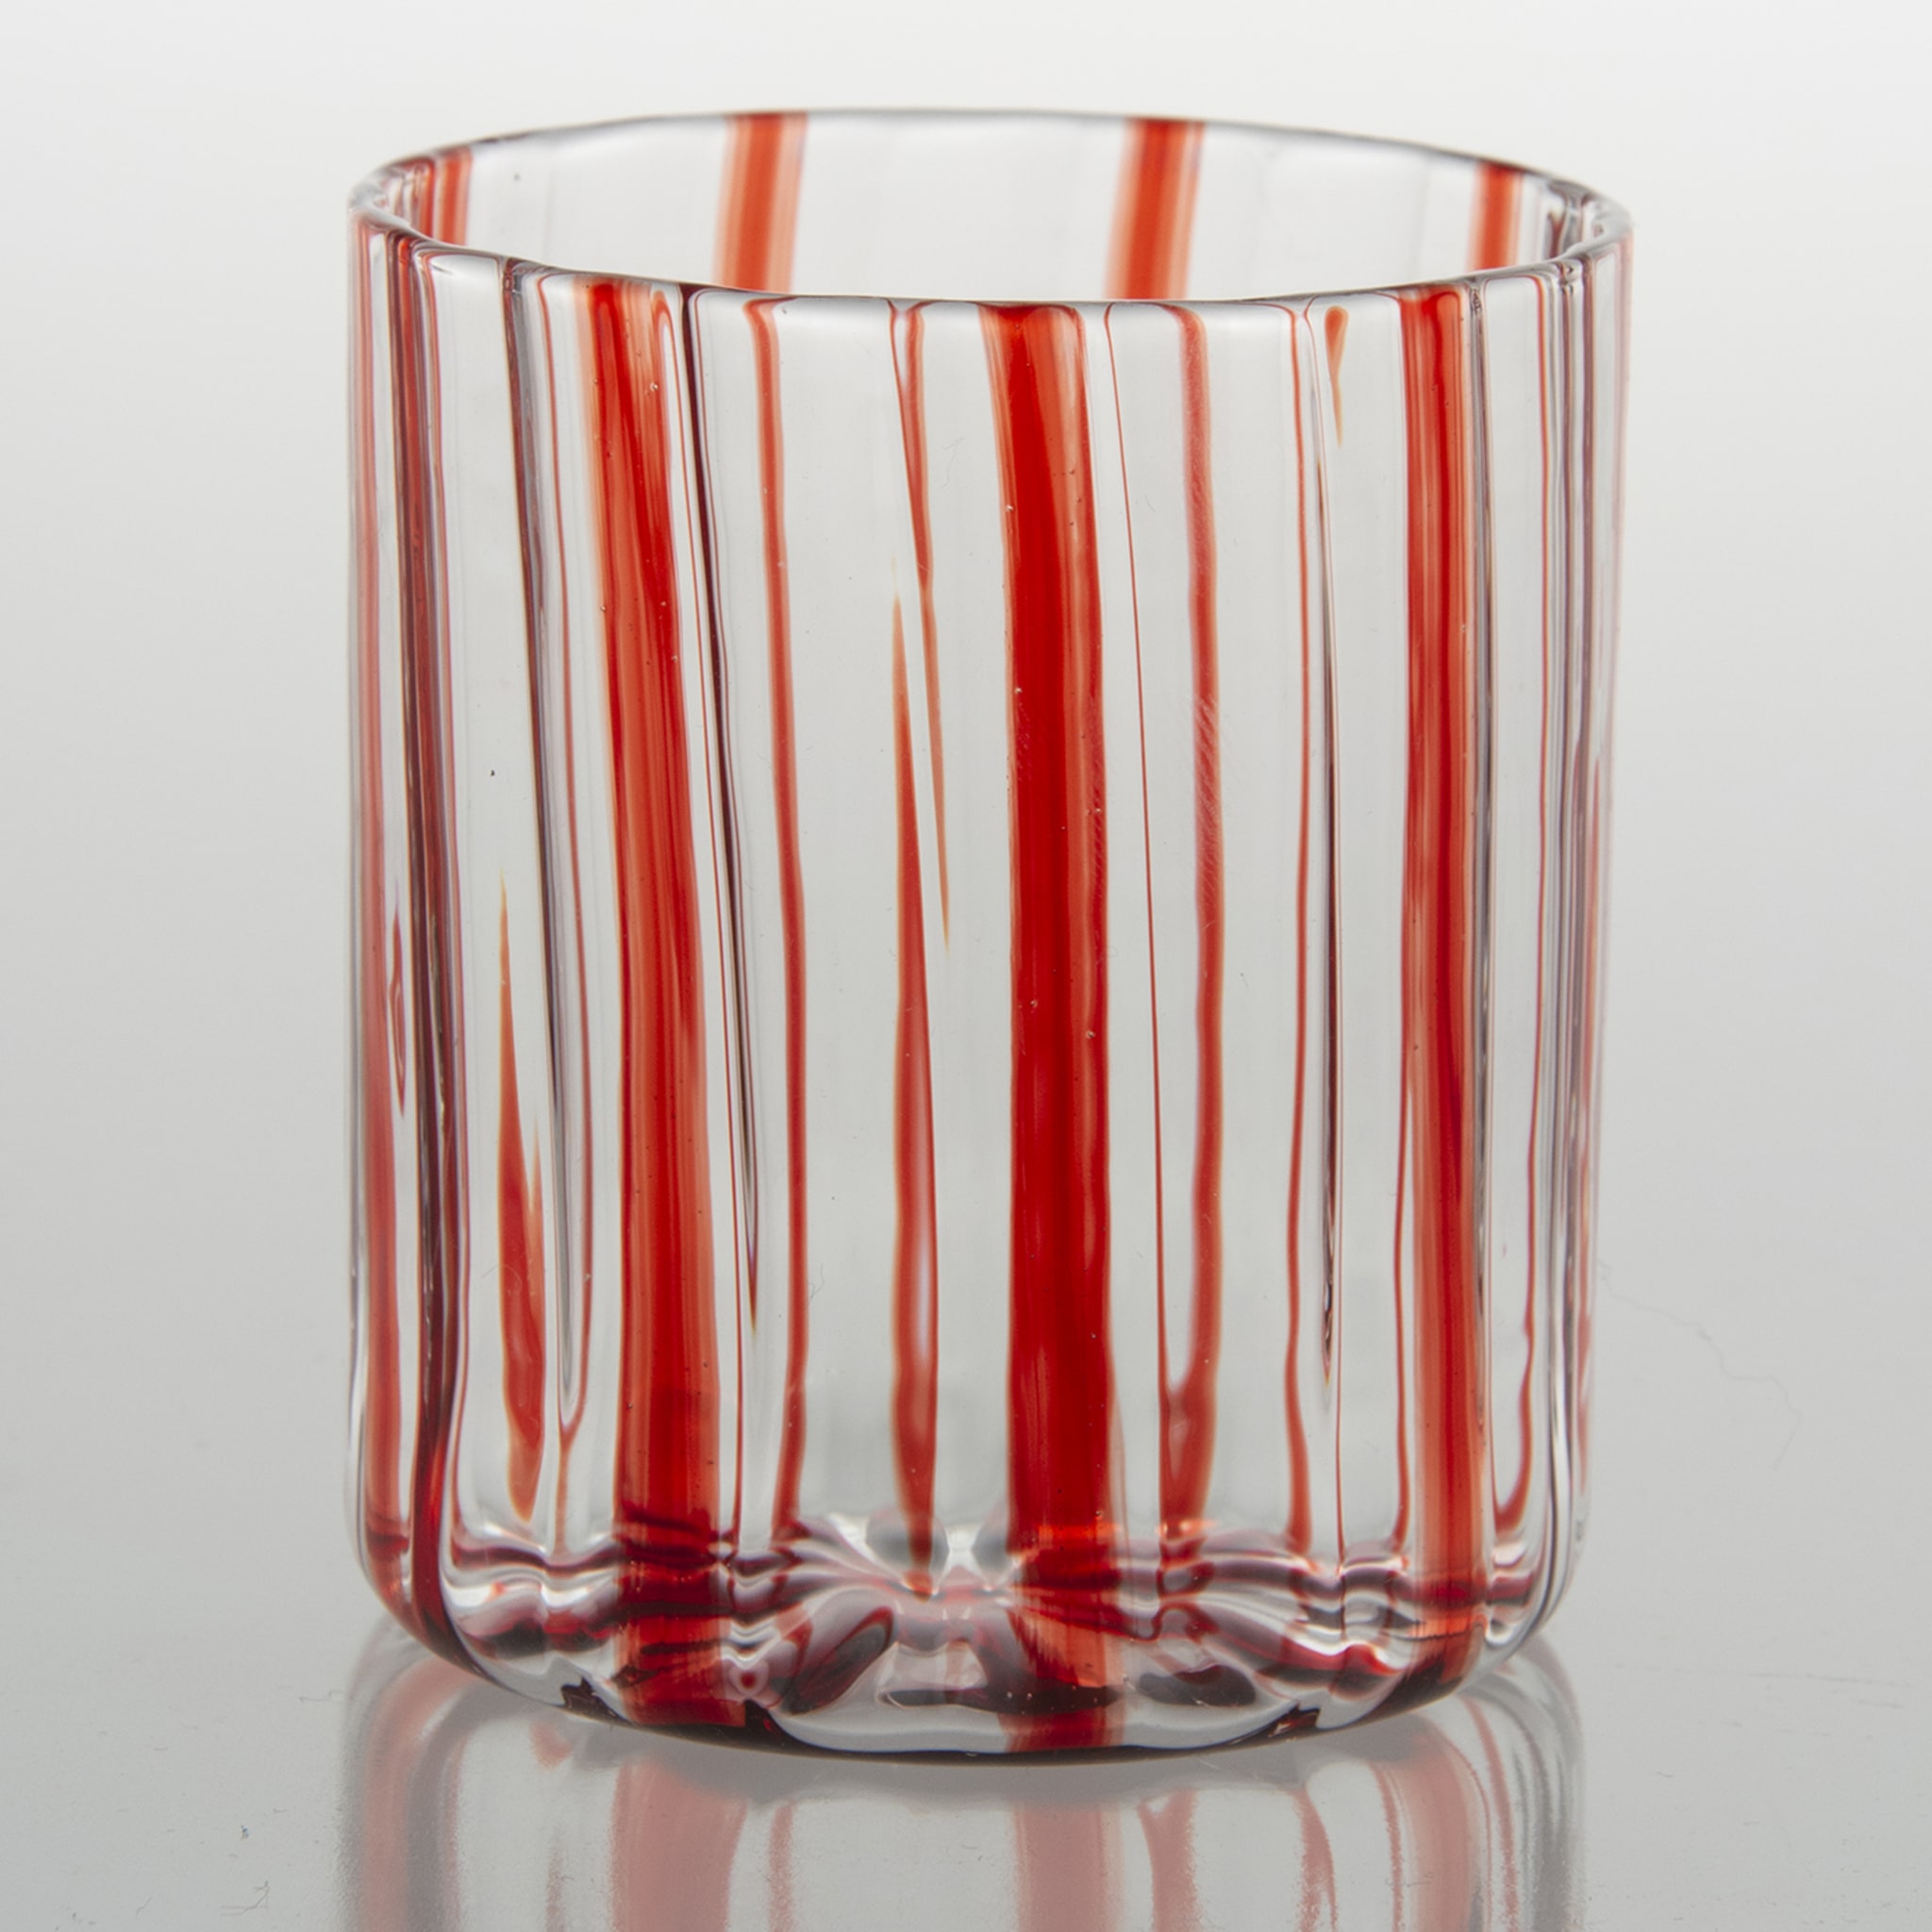 Red Stripes Glass - Alternative view 2